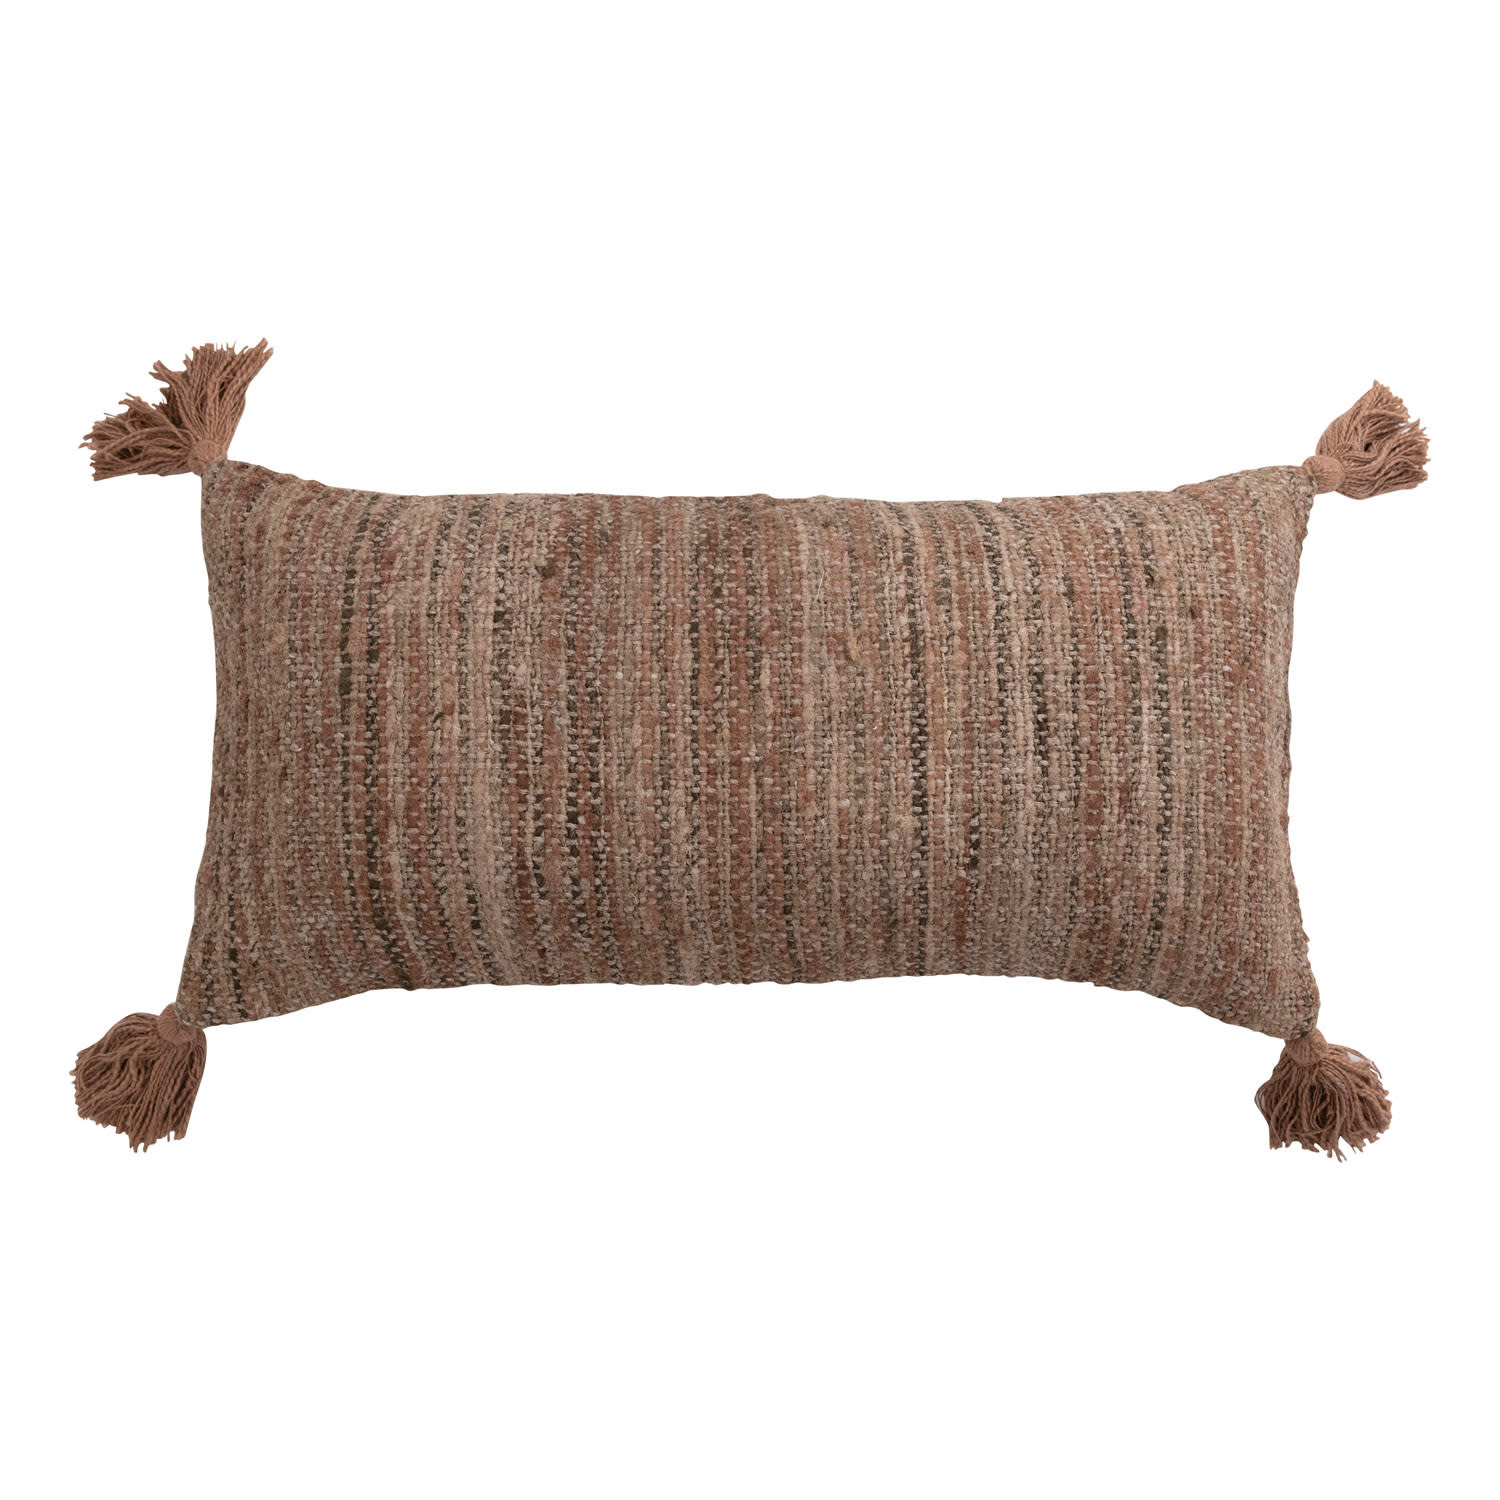 Woven Cotton Striped Lumbar Pillow w/ Chambray Back & Tassels, 28x14"